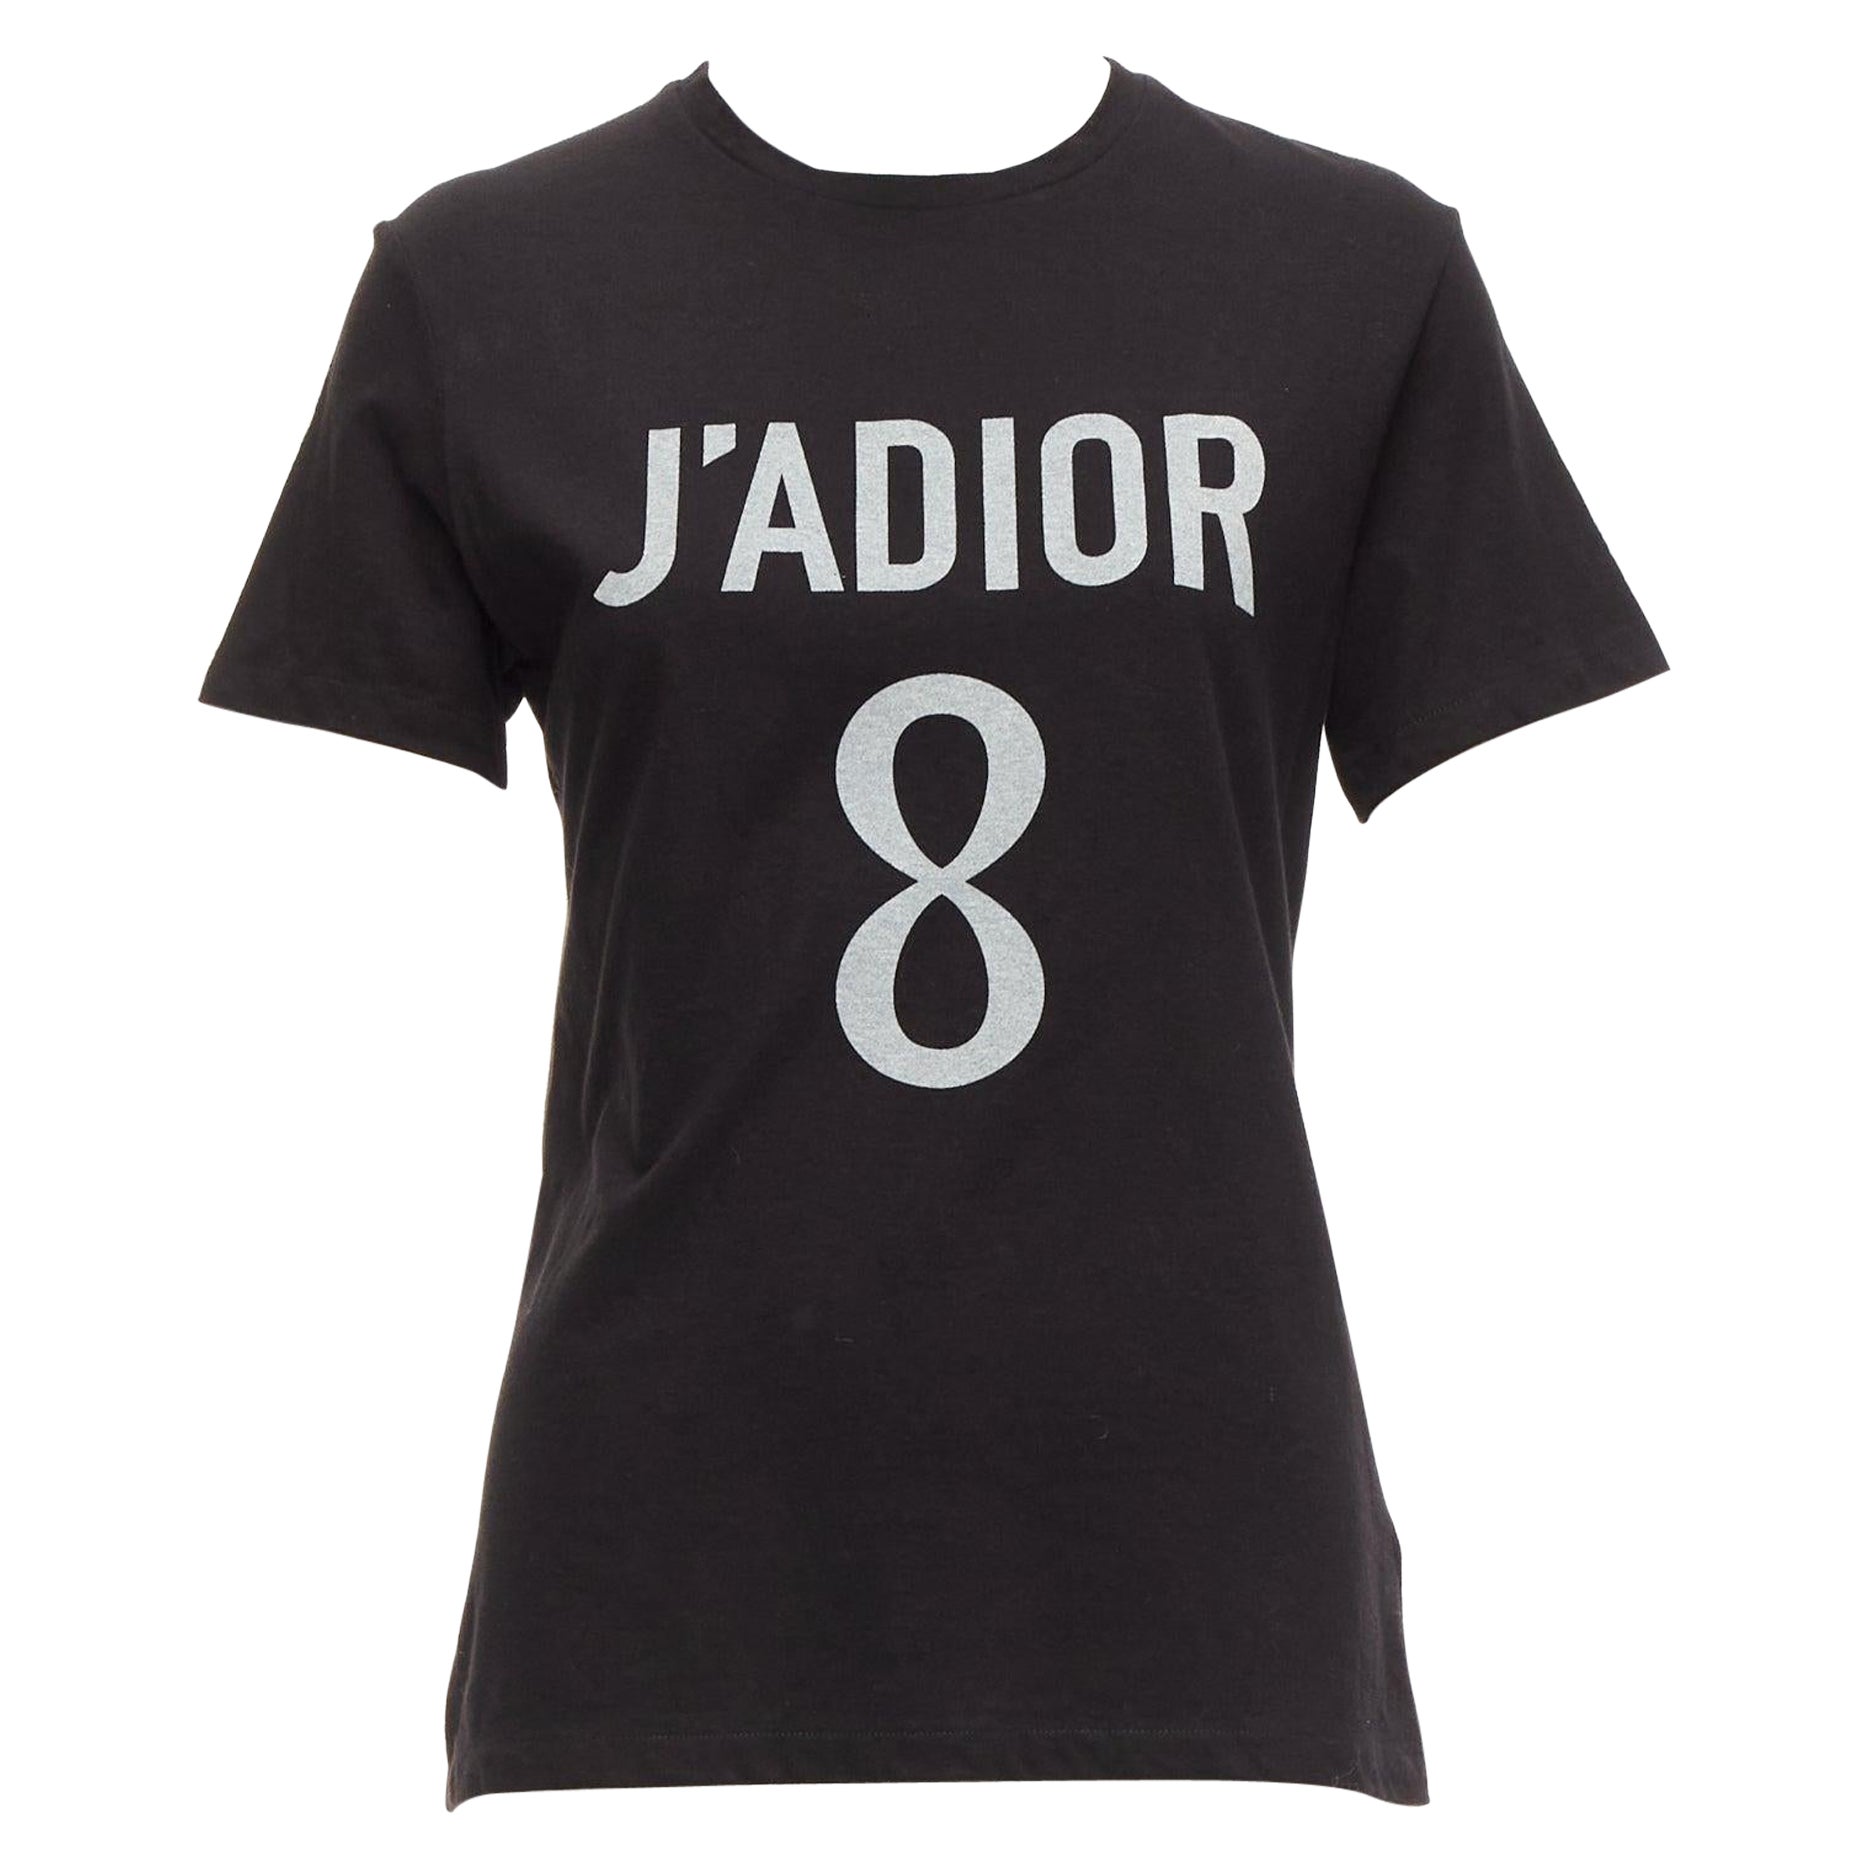 DIOR J'adior 8 black logo distressed screen print fitted tshirt XS For Sale